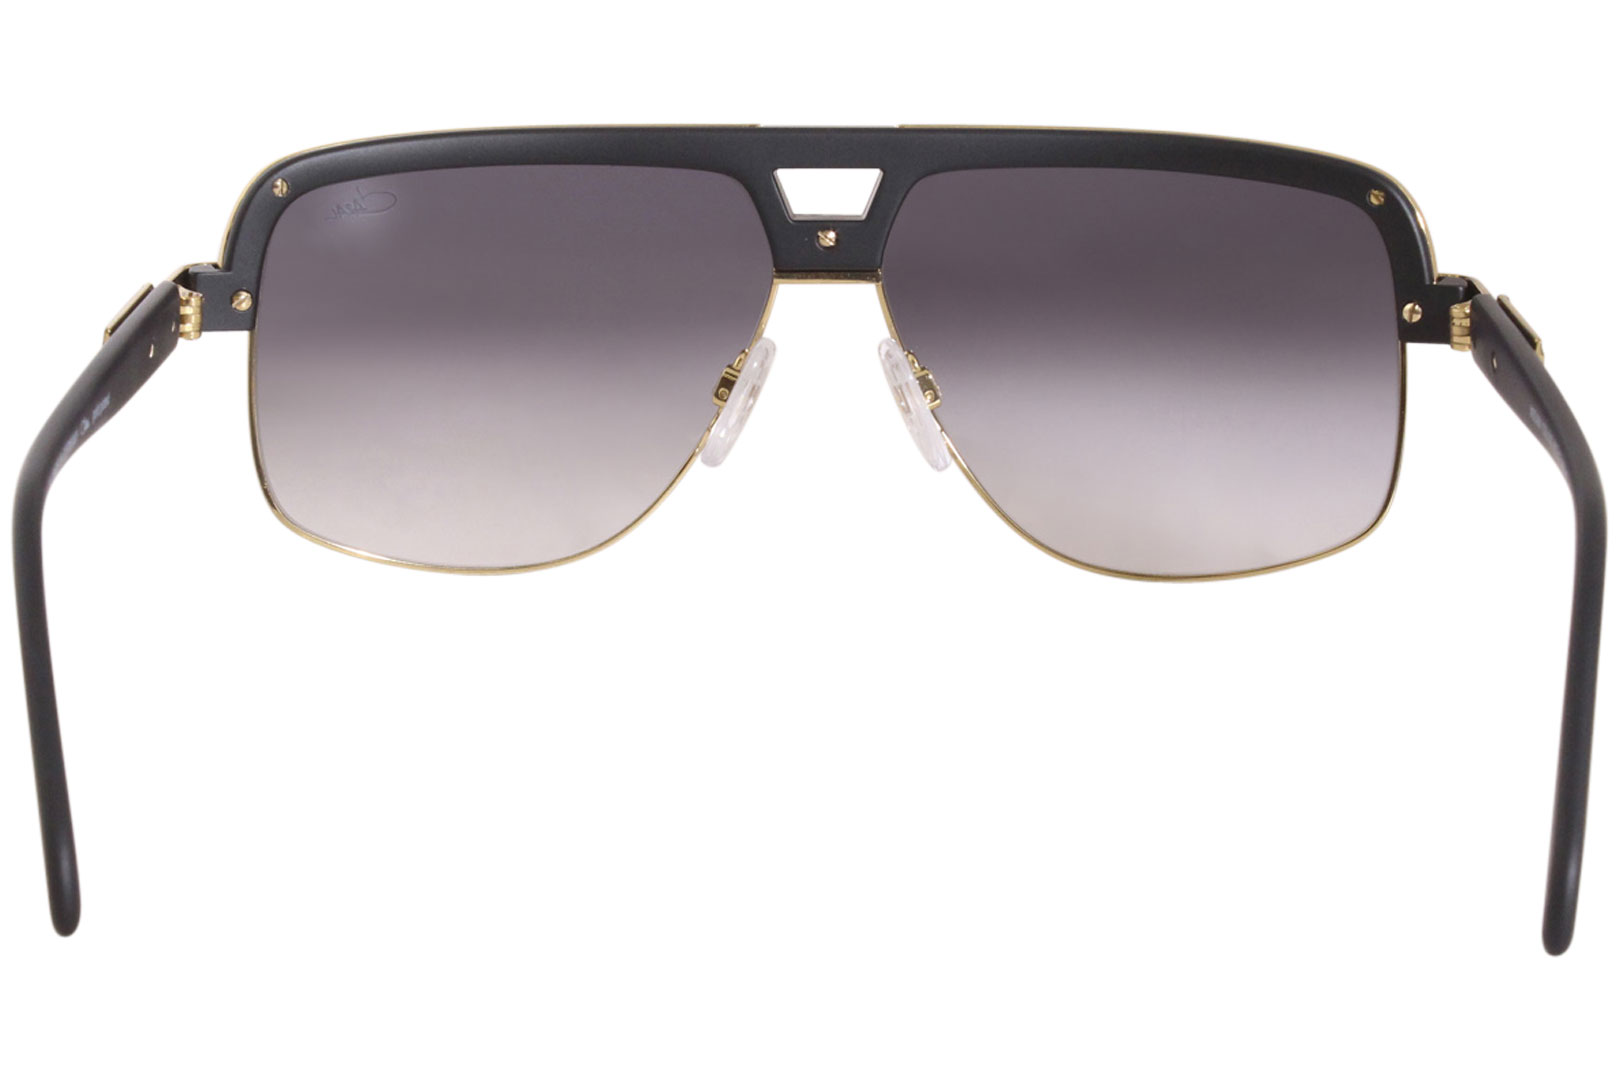 Cazal Legends 991 002 Sunglasses Men's Black-Gold/Grey Gradient Lens ...